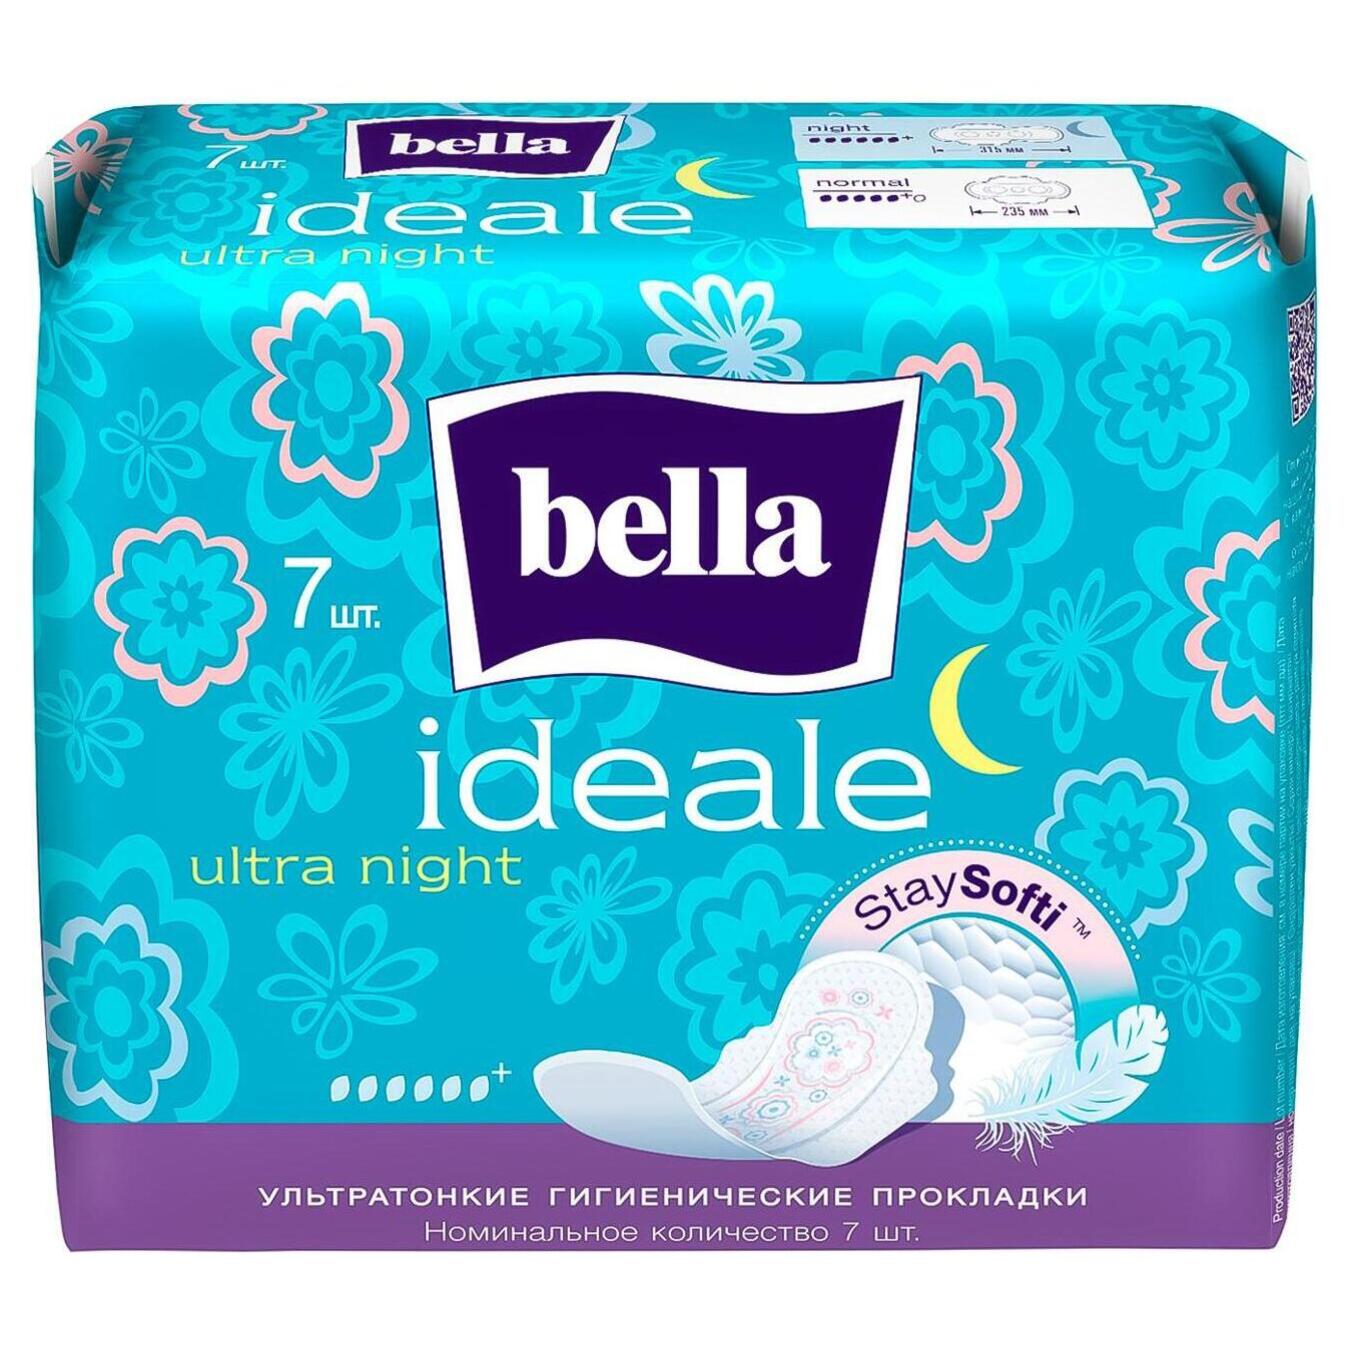 Гигиенические прокладки Bella Ideale Ultra Night staysofti 7шт